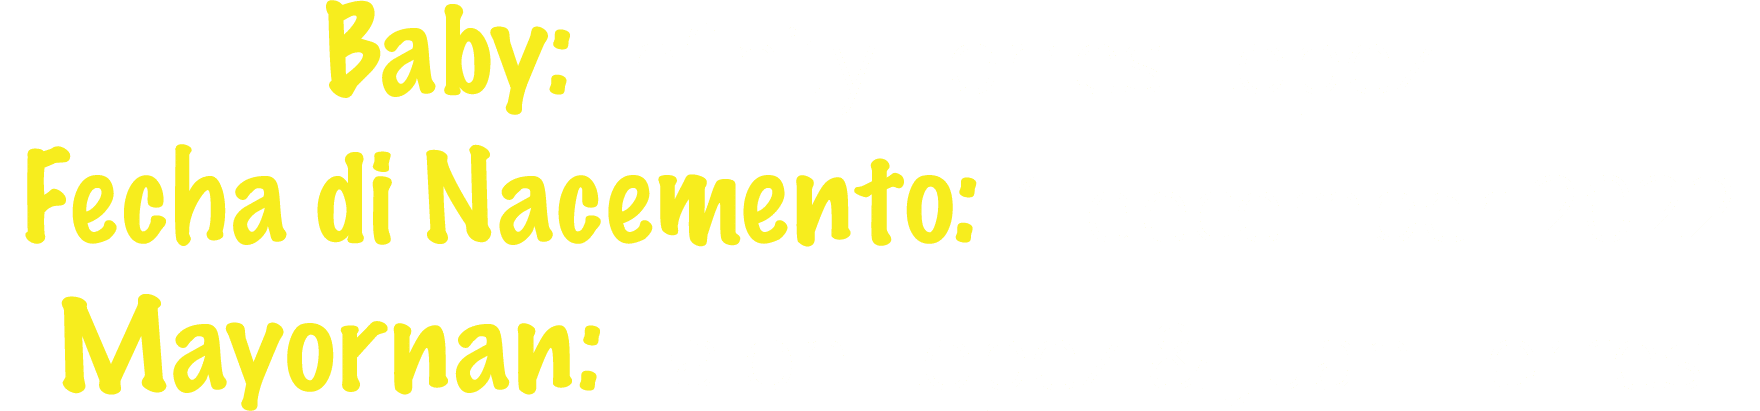 Baby: Infinity Torres Lopez Fecha di Nacemento: 1 december 2022 Mayornan: Falon Lopez & Juan Torres